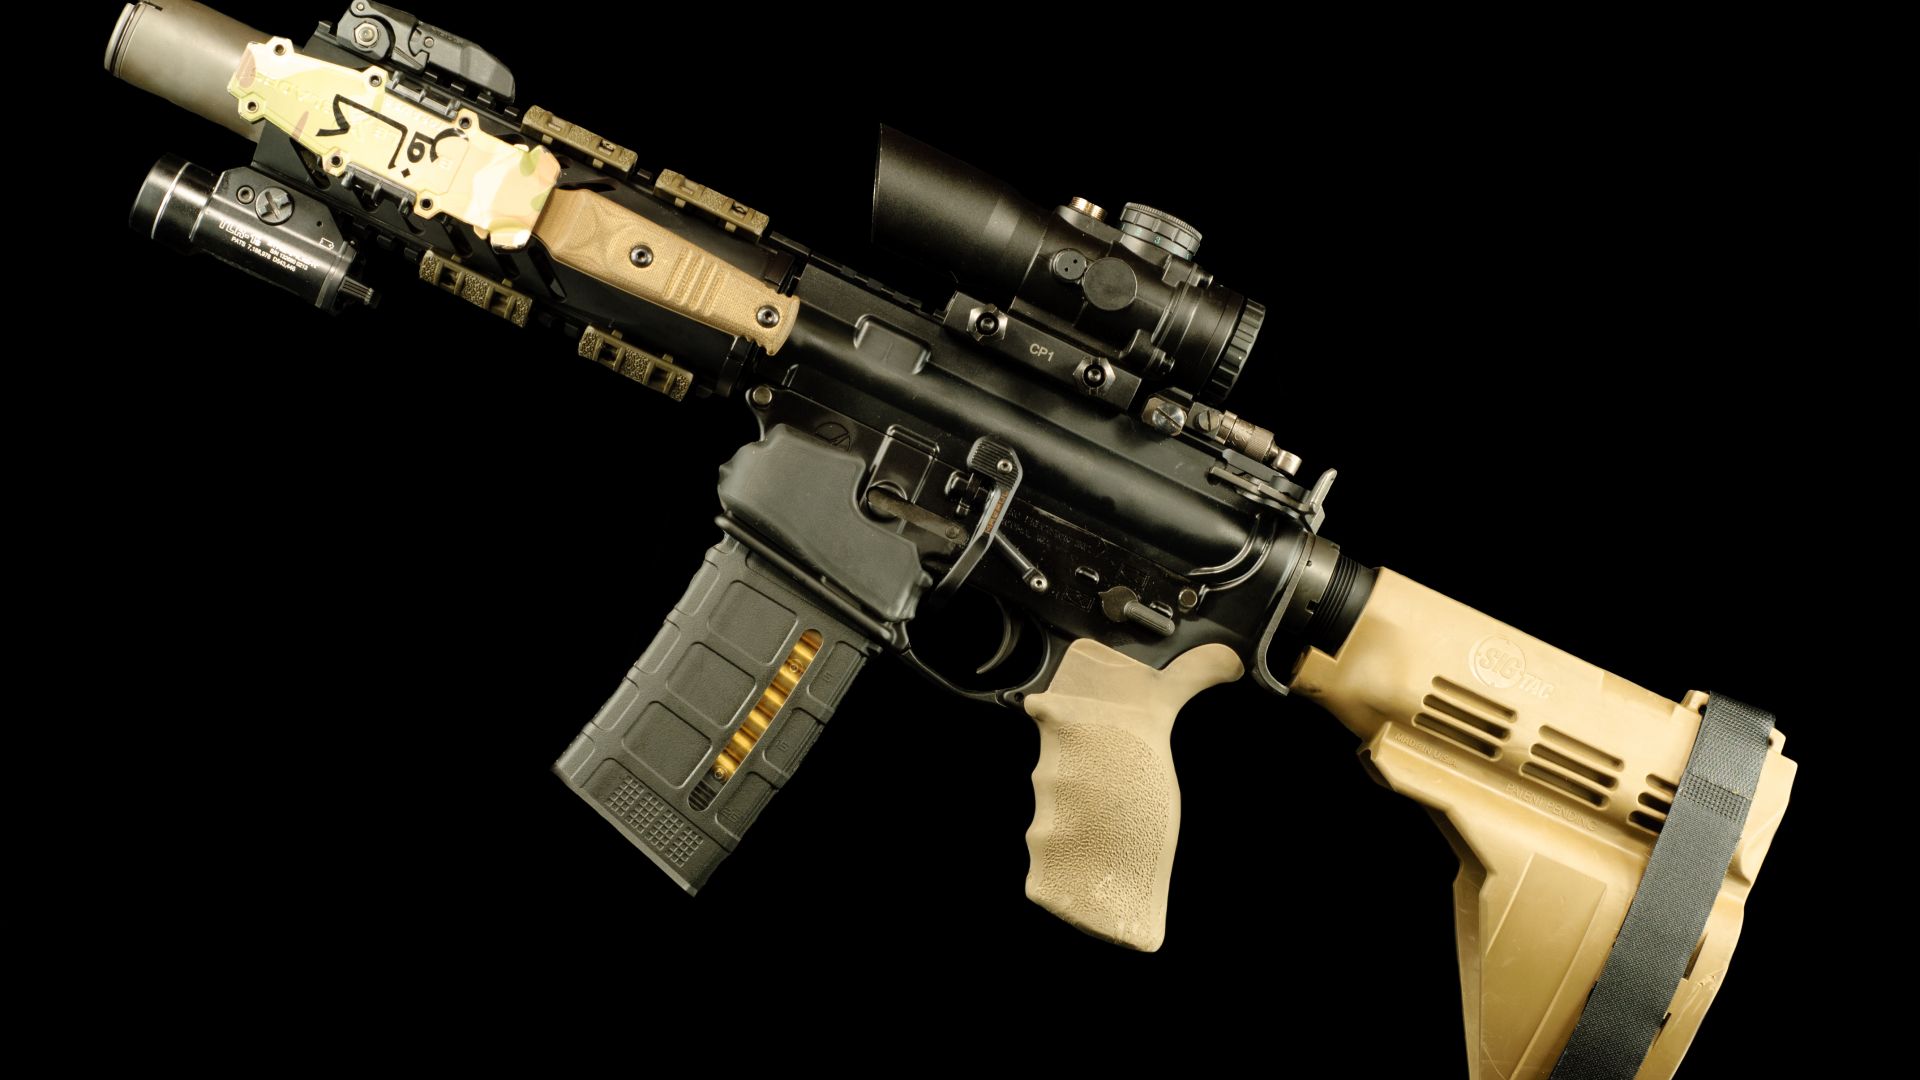 AR-15 rifle, 5, 56×45, Армия США, AR-15 rifle, 5, 56×45, U.S. Army (horizontal)